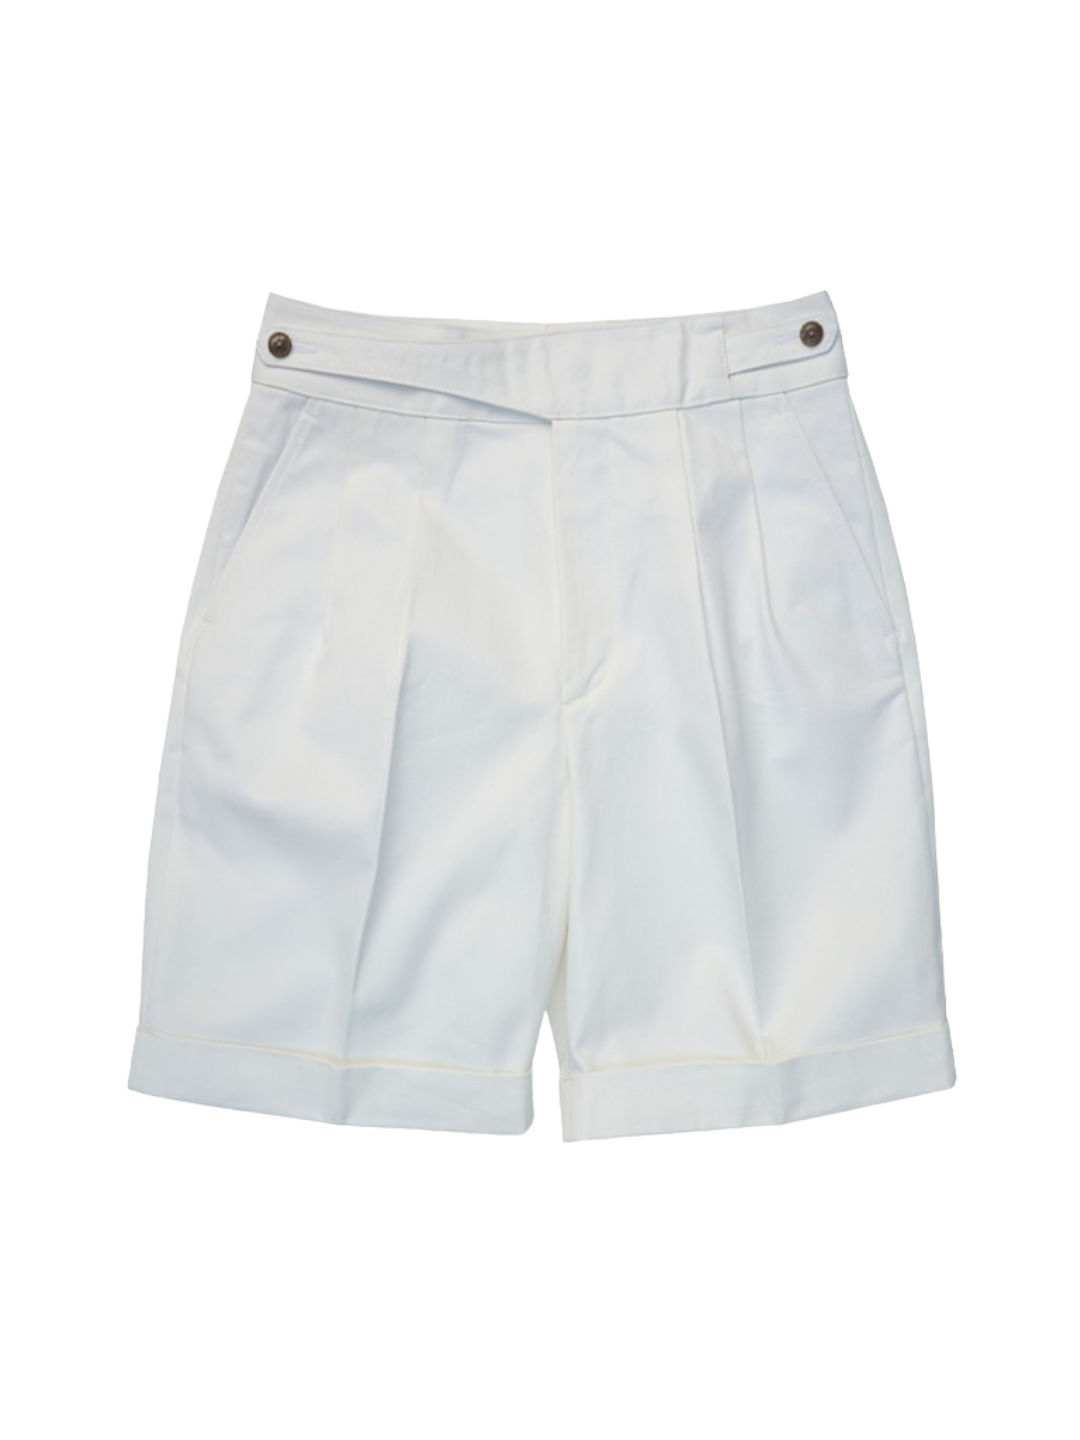 (BYU) Gurkha Shorts (White)